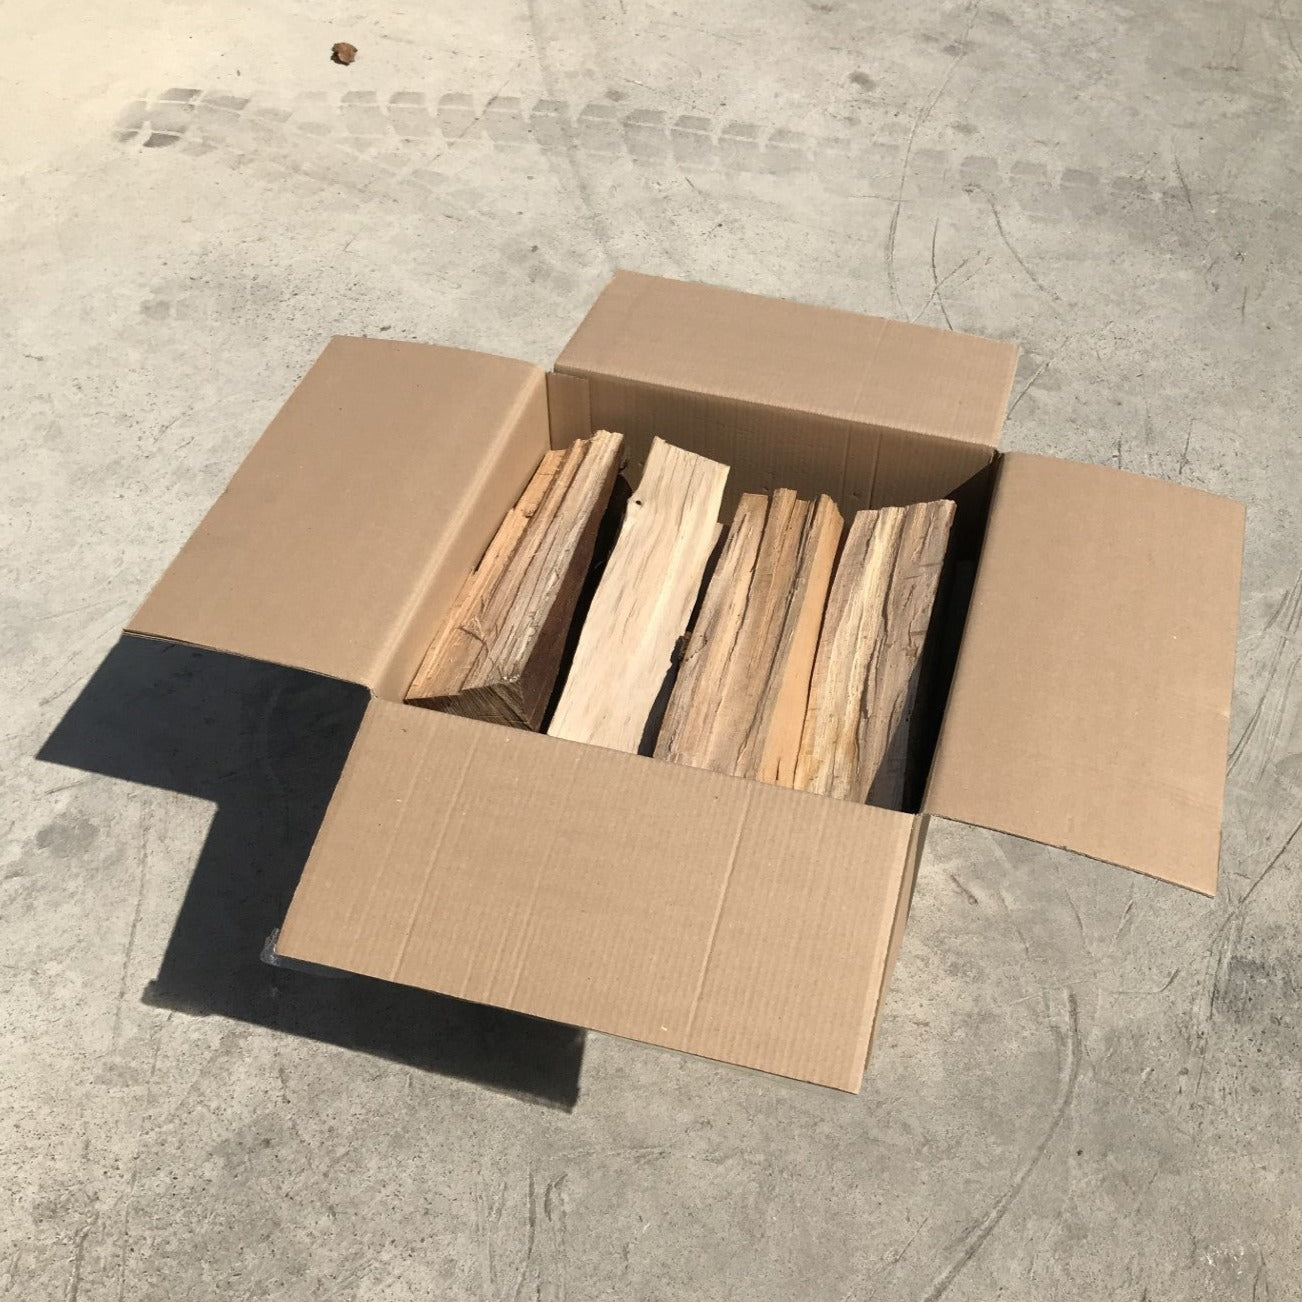 Buchenholz 15 kg Karton